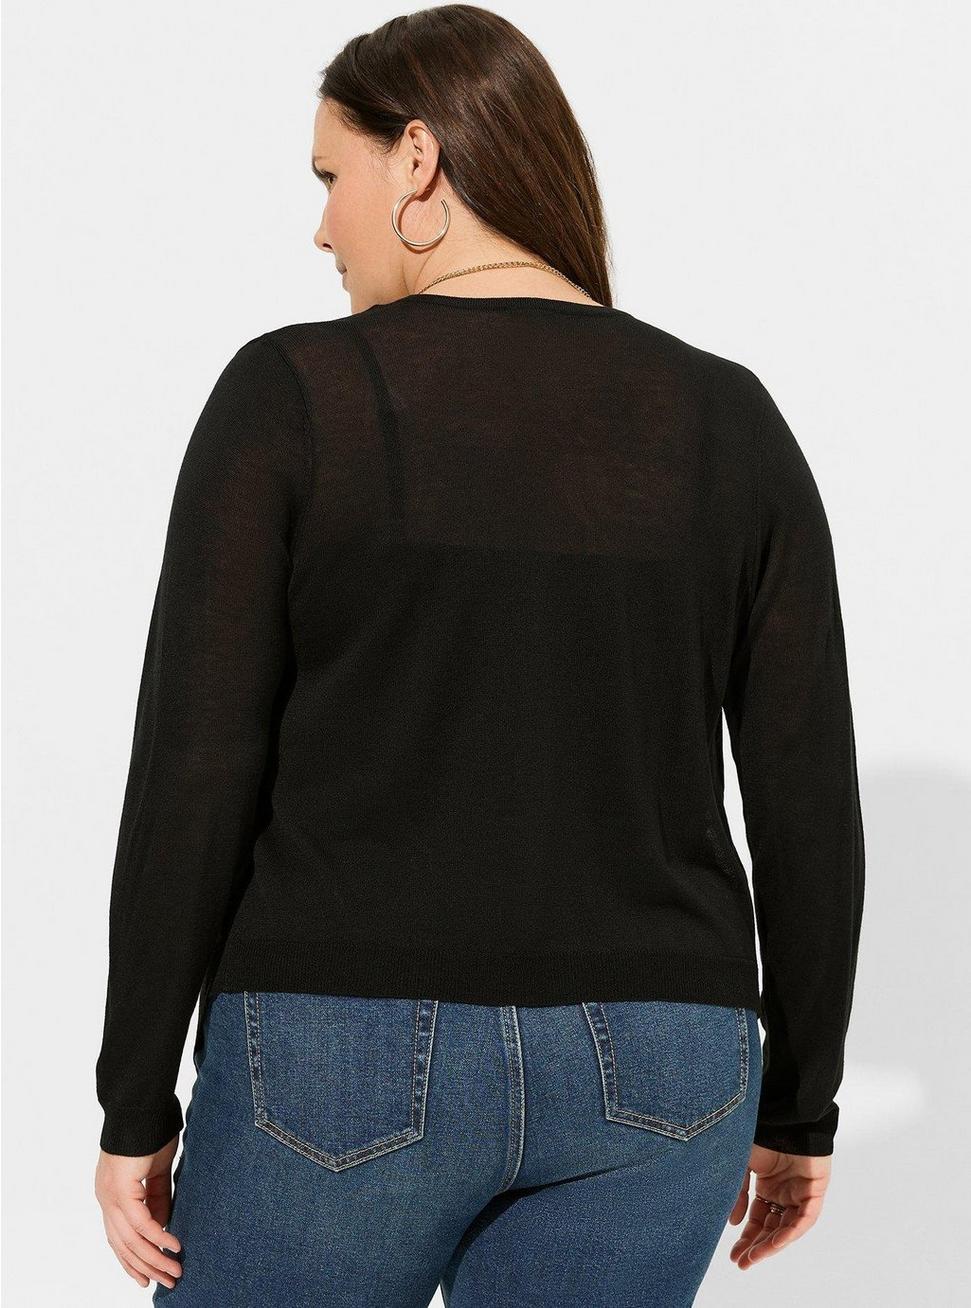 Tissue Weight Cardigan Drape Front Sweater, DEEP BLACK, alternate